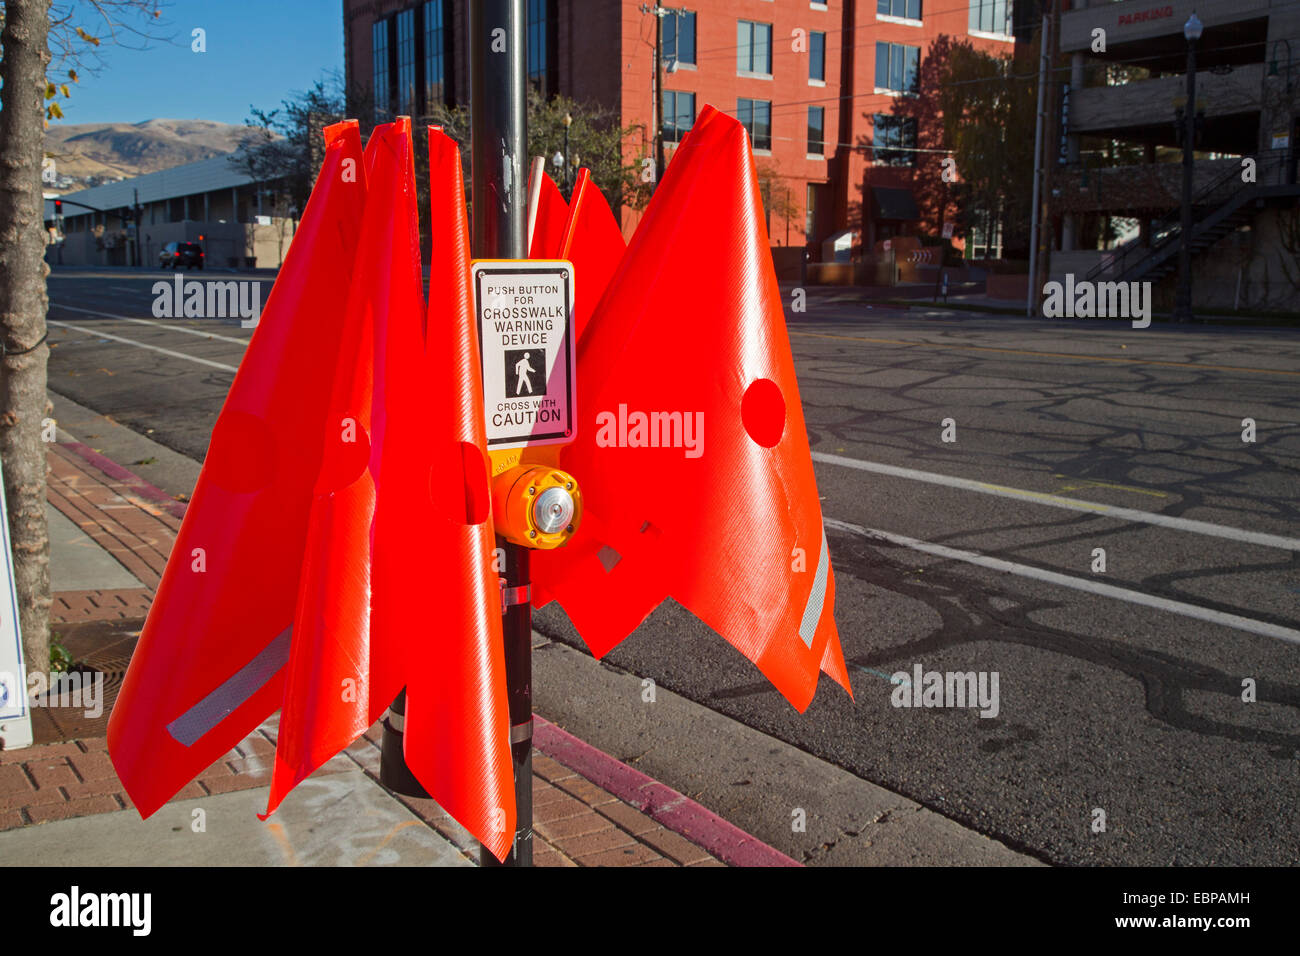 Salt Lake City, Utah - Crosswalk safety flags at a pedestrian street crossing. Stock Photo